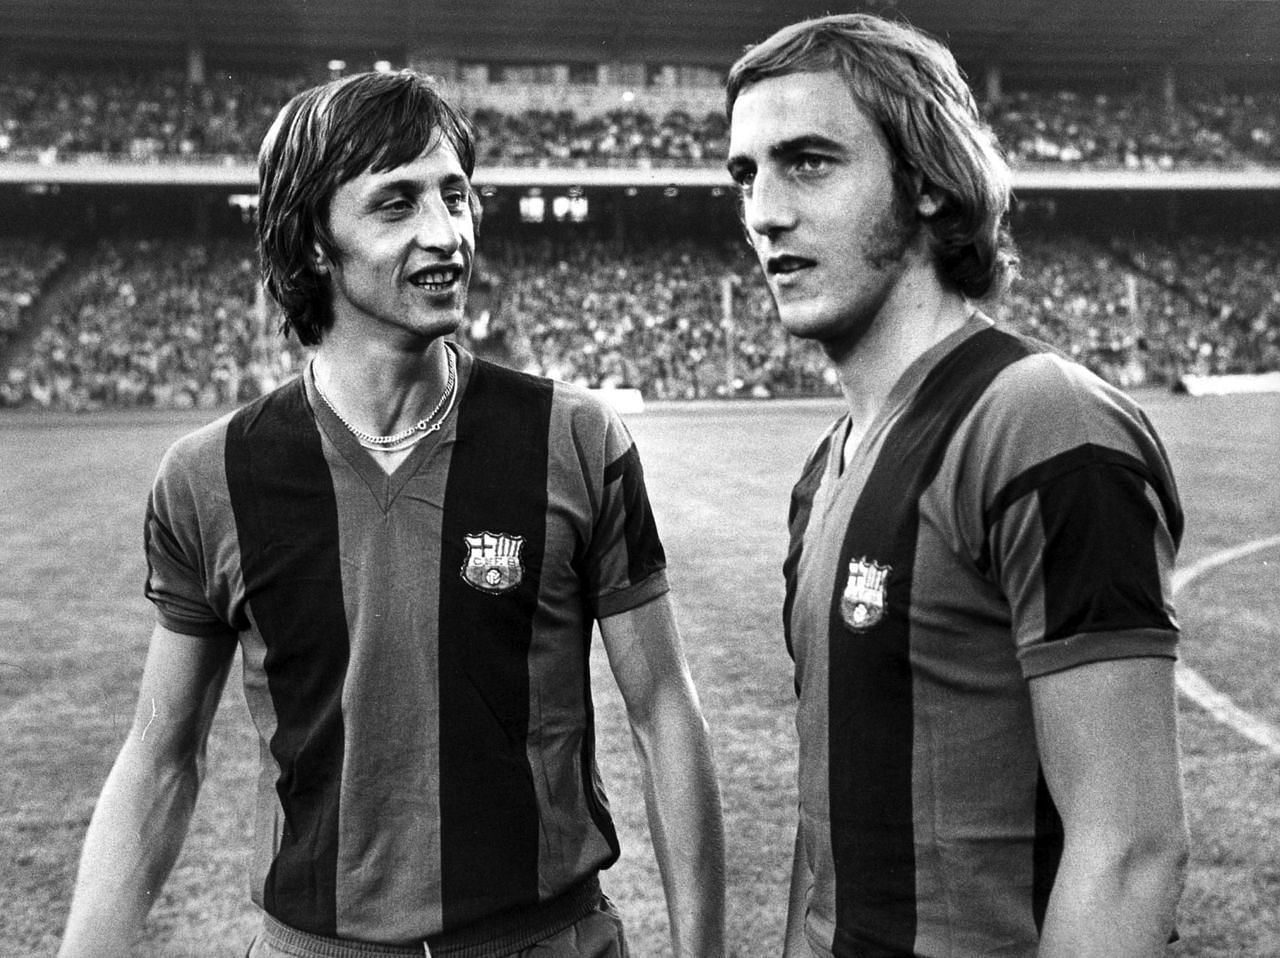 Johan Cruyff (left) and Johan Neeskens (right)